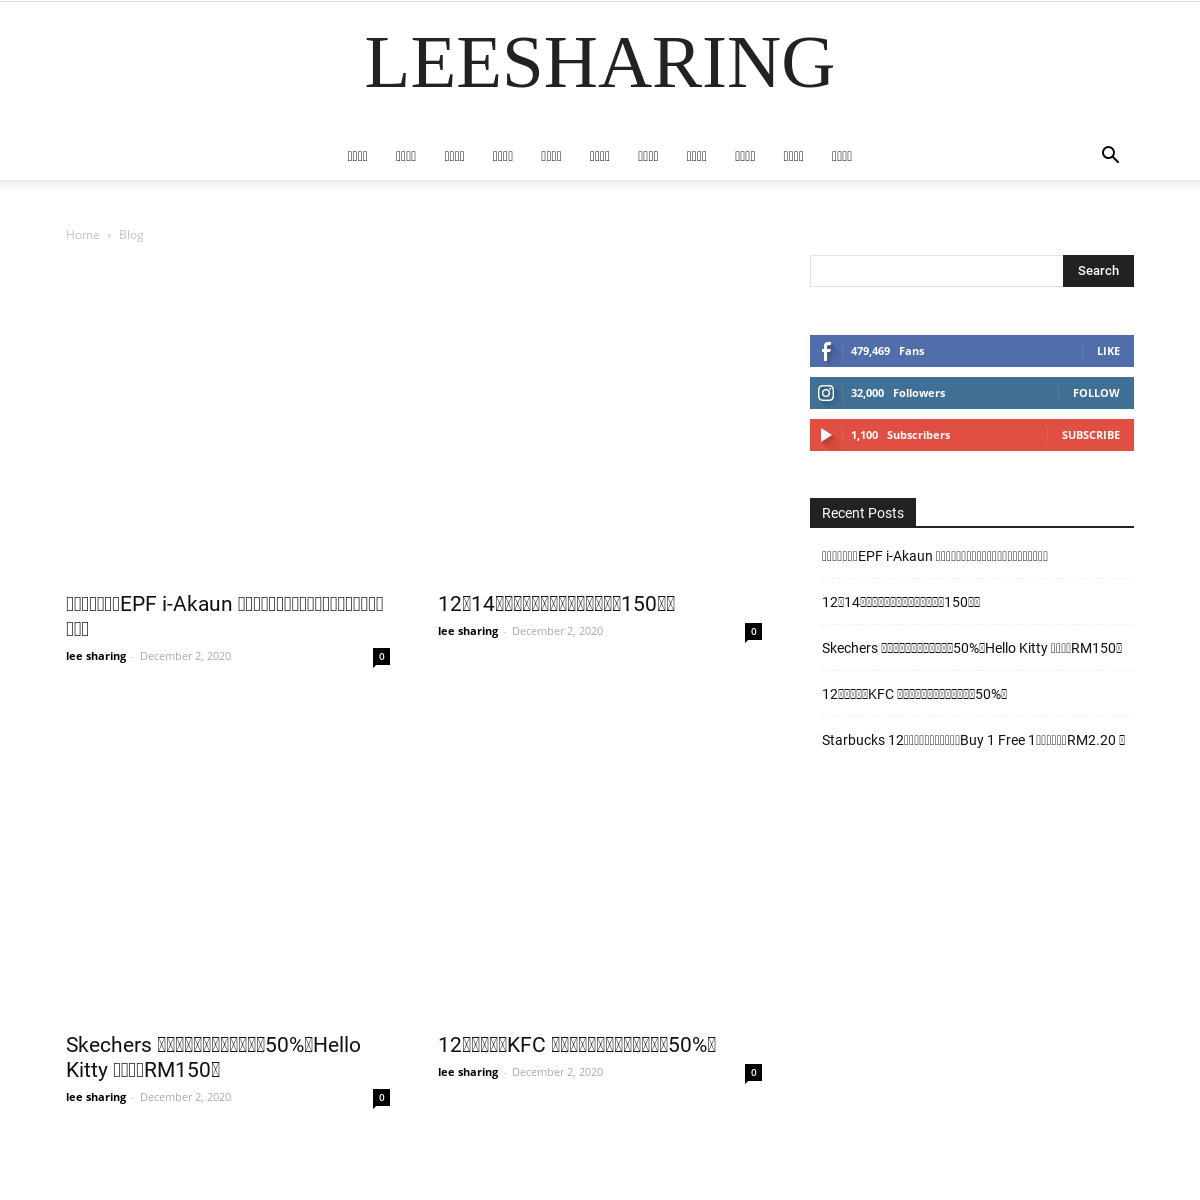 A complete backup of leesharing.com